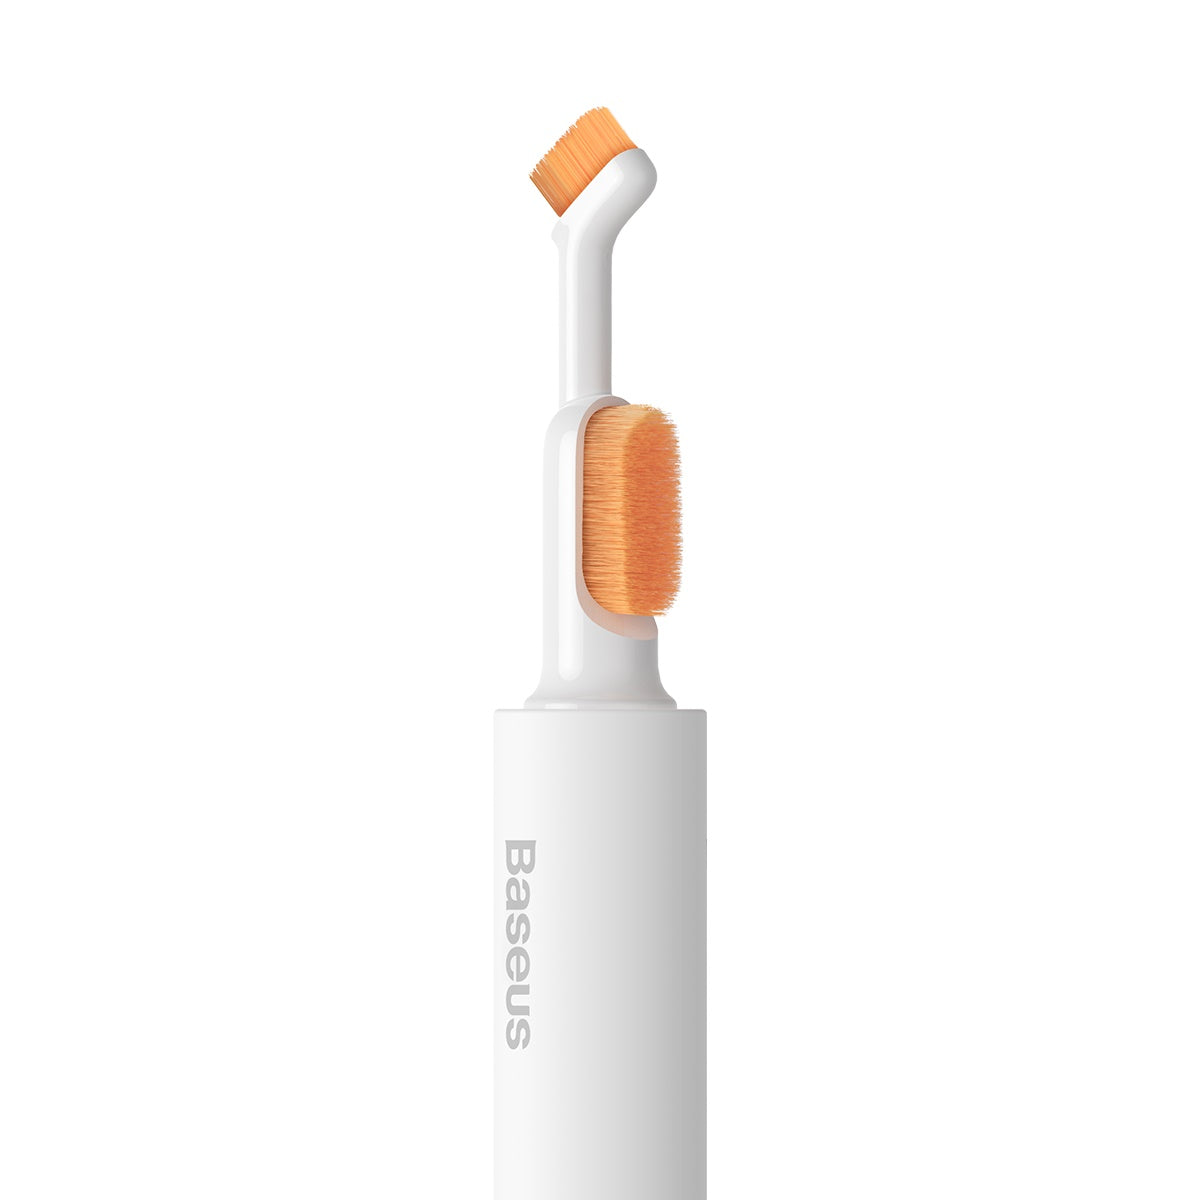 Baseus Cleaning Brush Pen | Earphones Cleaning Tool